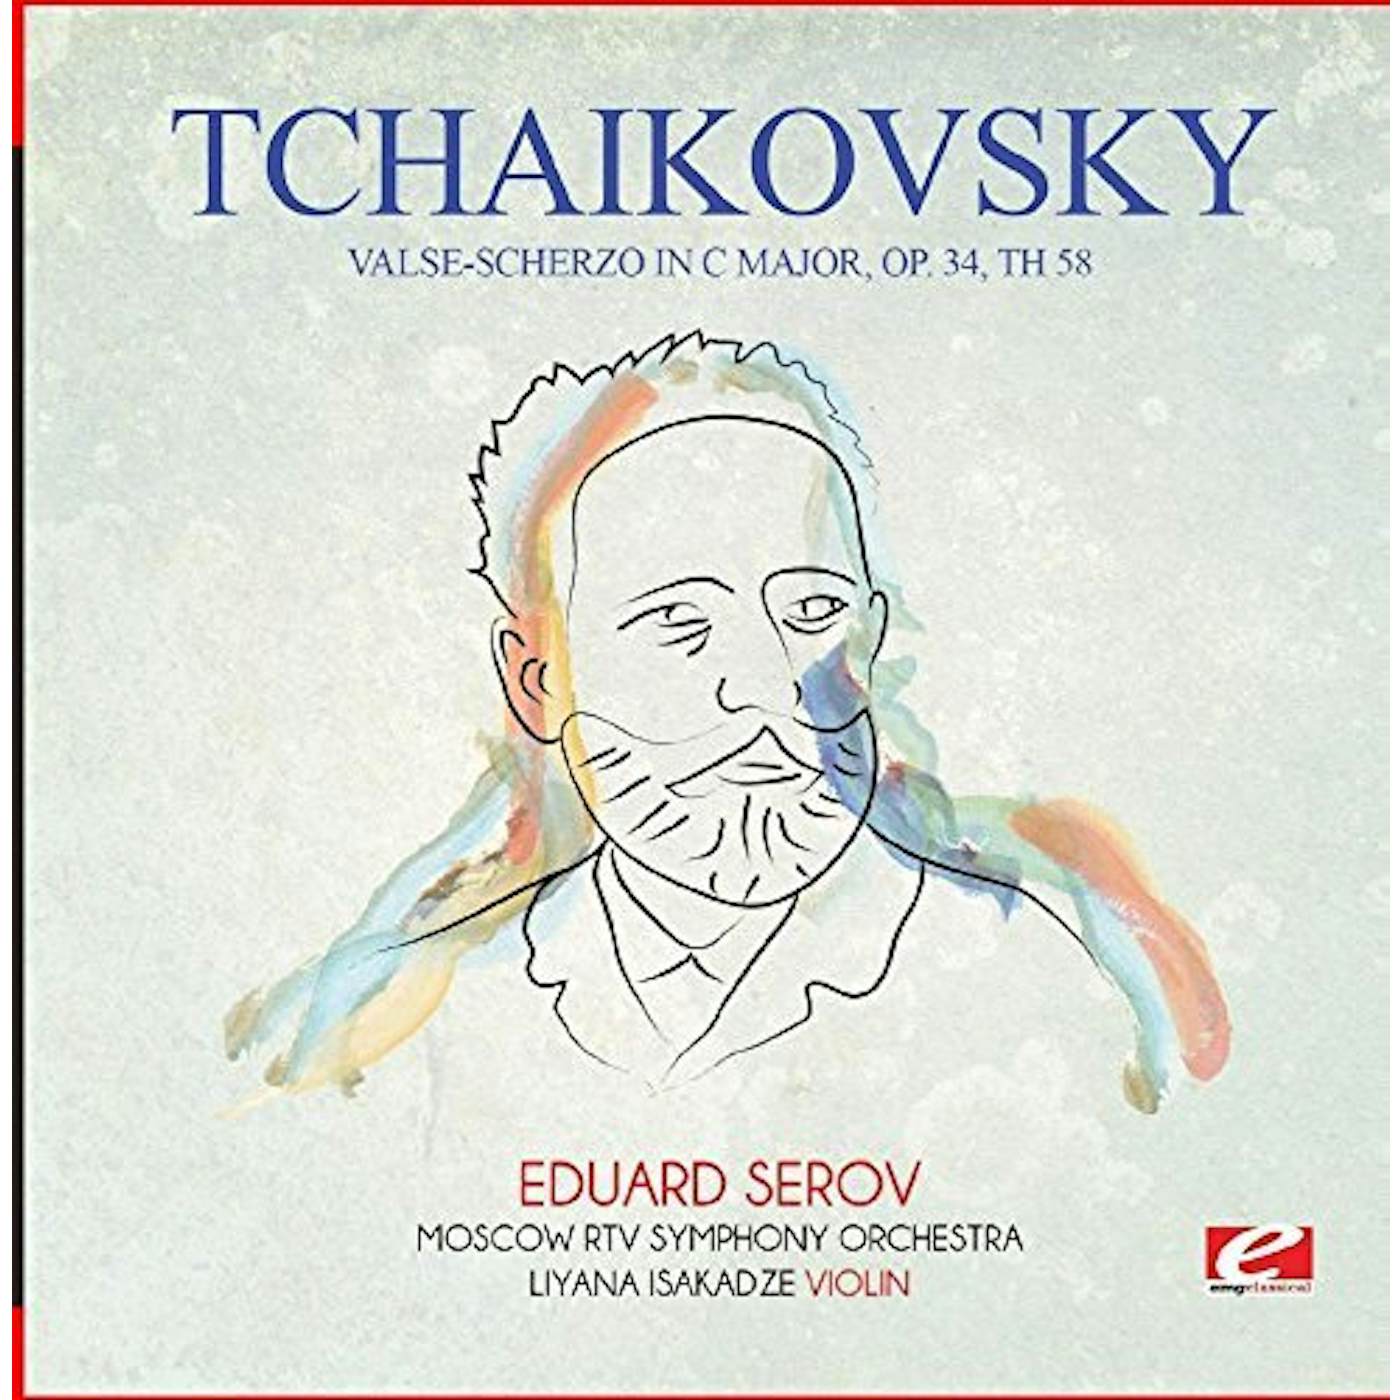 Pyotr Ilyich Tchaikovsky VALSE-SCHERZO IN C MAJOR OP. 34 TH 58 CD